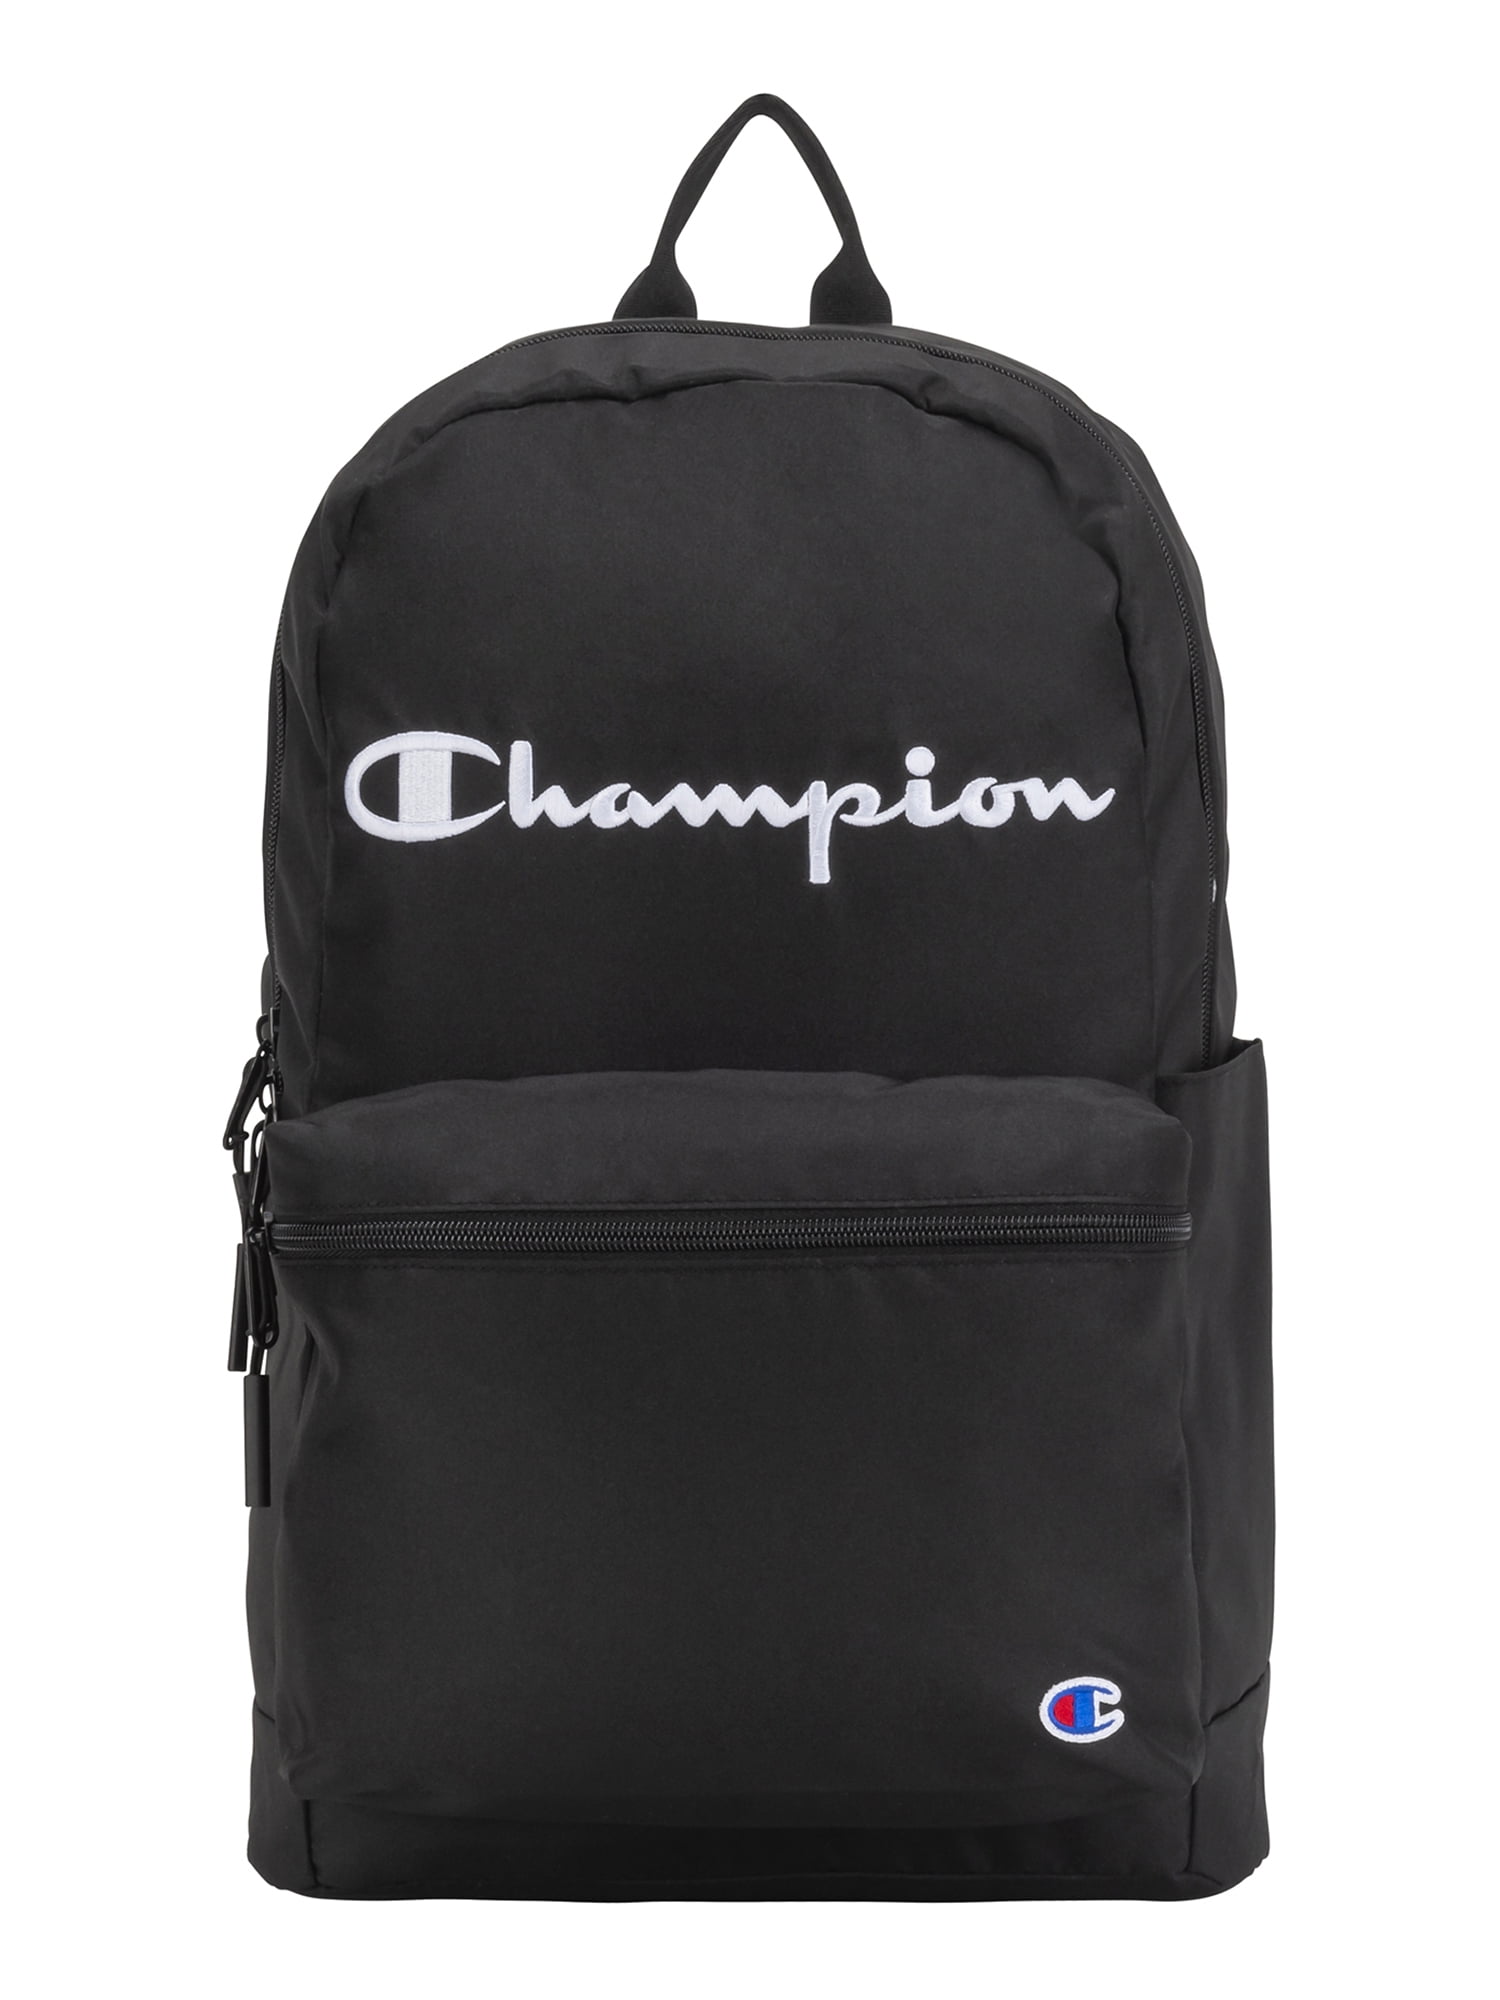 Champion Asher Backpack, Black 